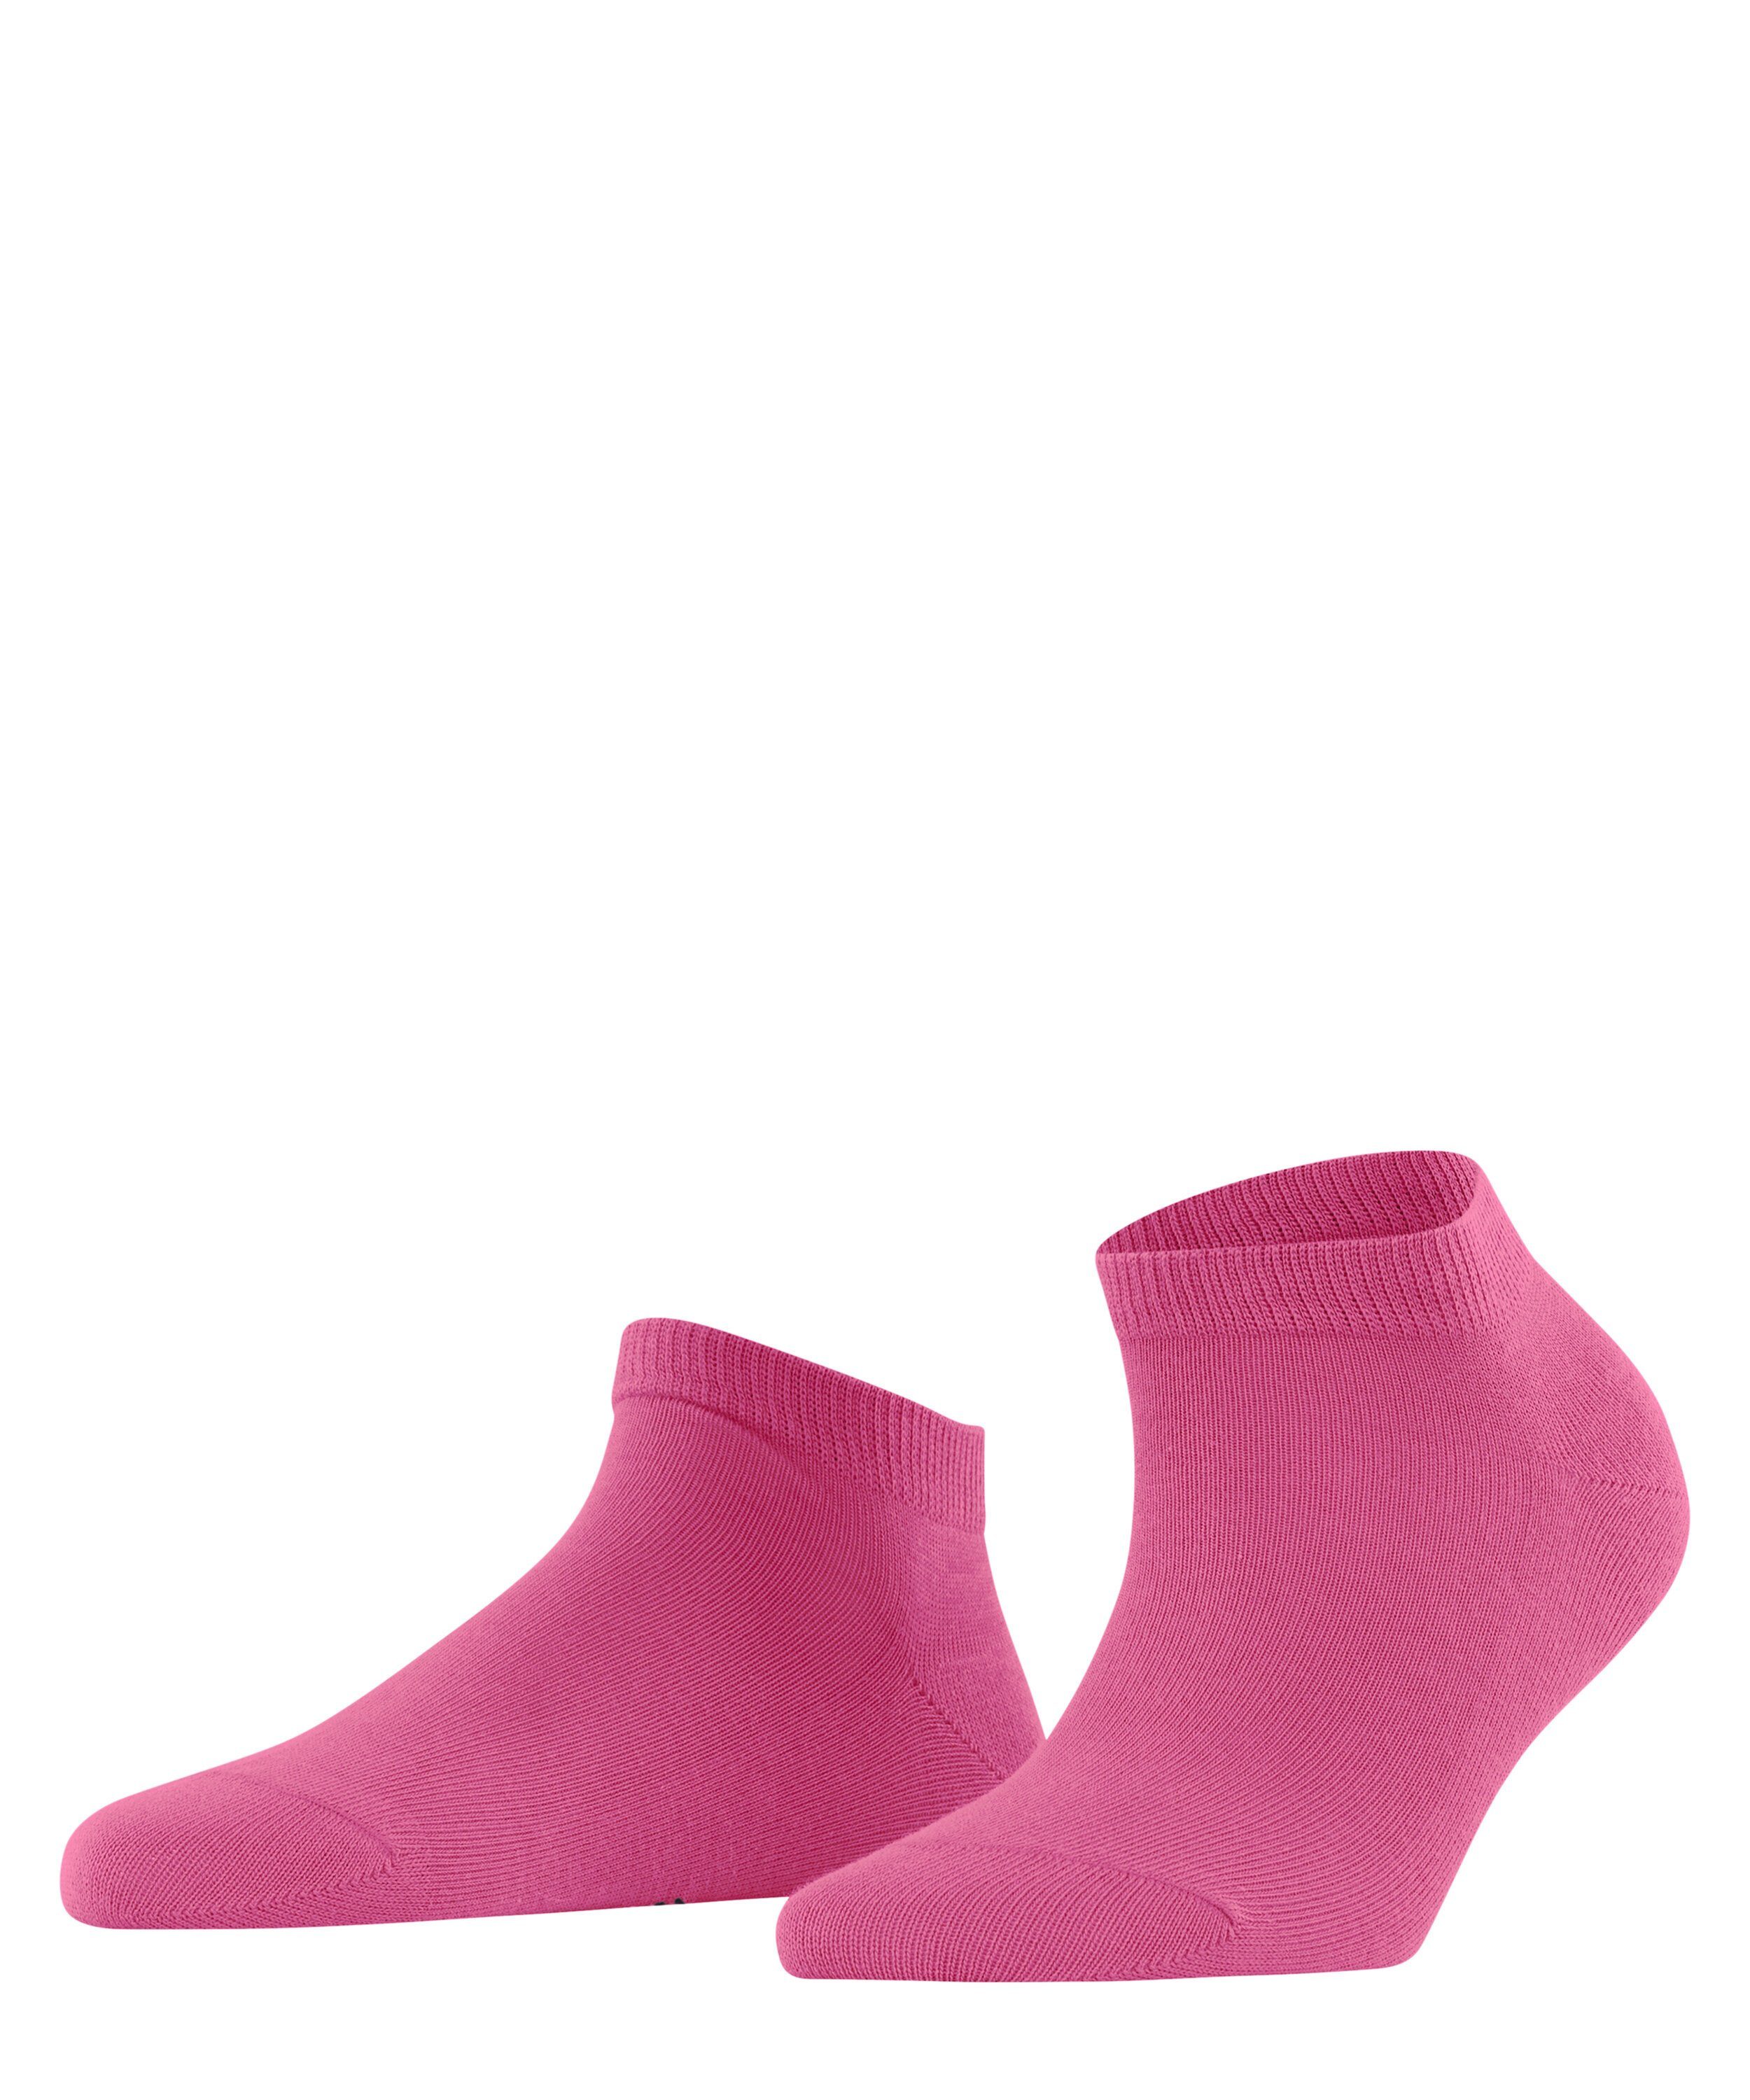 Toller Versandpreis! FALKE Sneakersocken (8462) pink (1-Paar) Family nachhaltiger mit Baumwolle